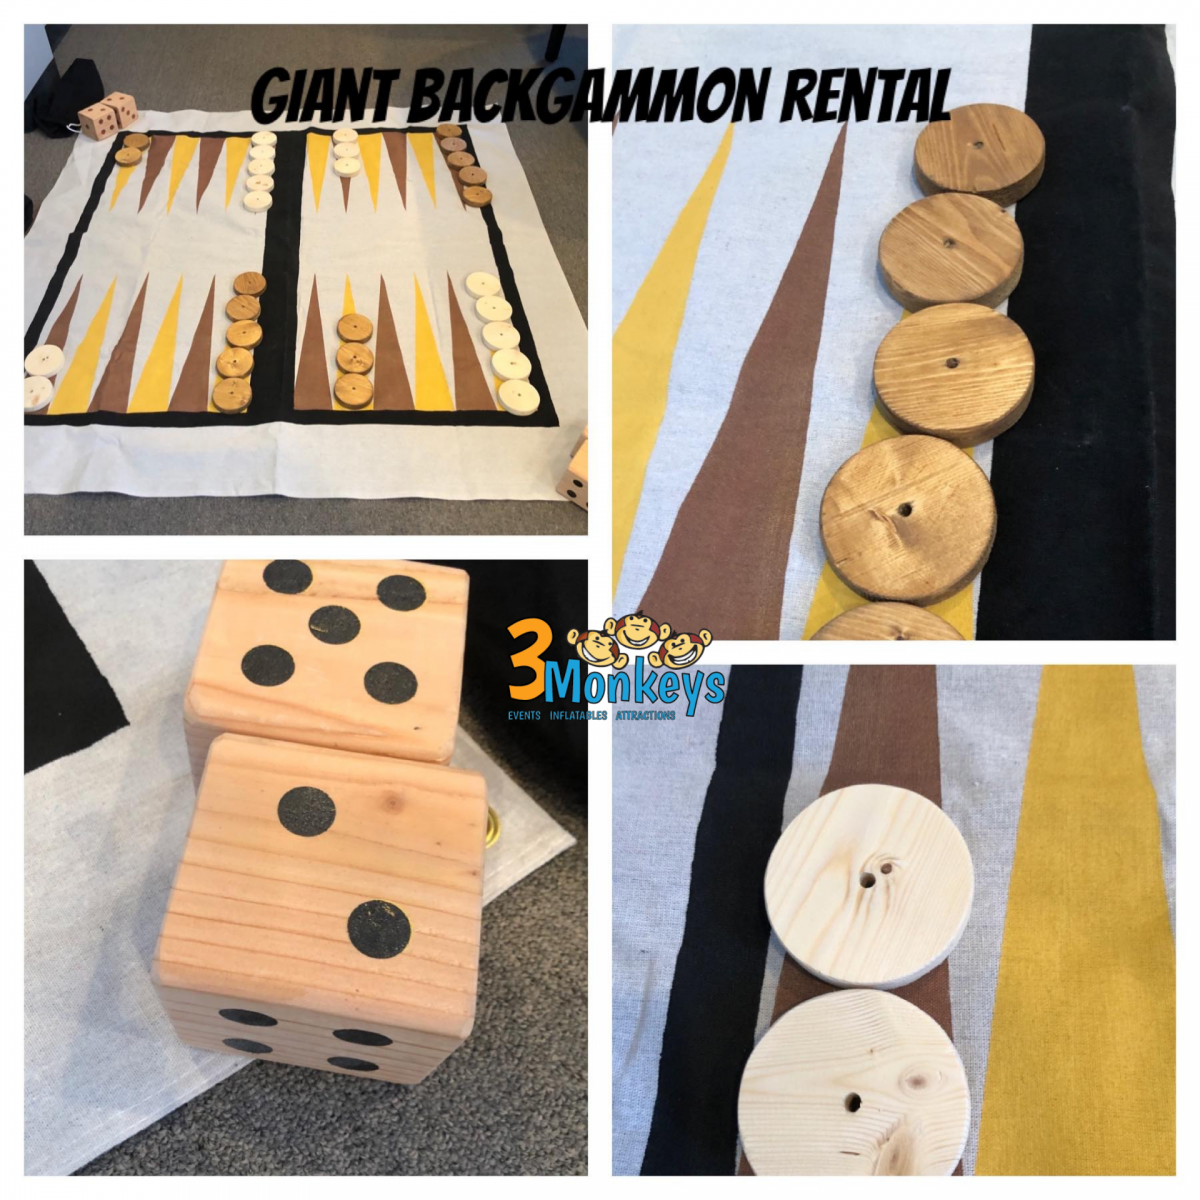 Giant Backgammon Game Rental Pennsylvania Event Rentals